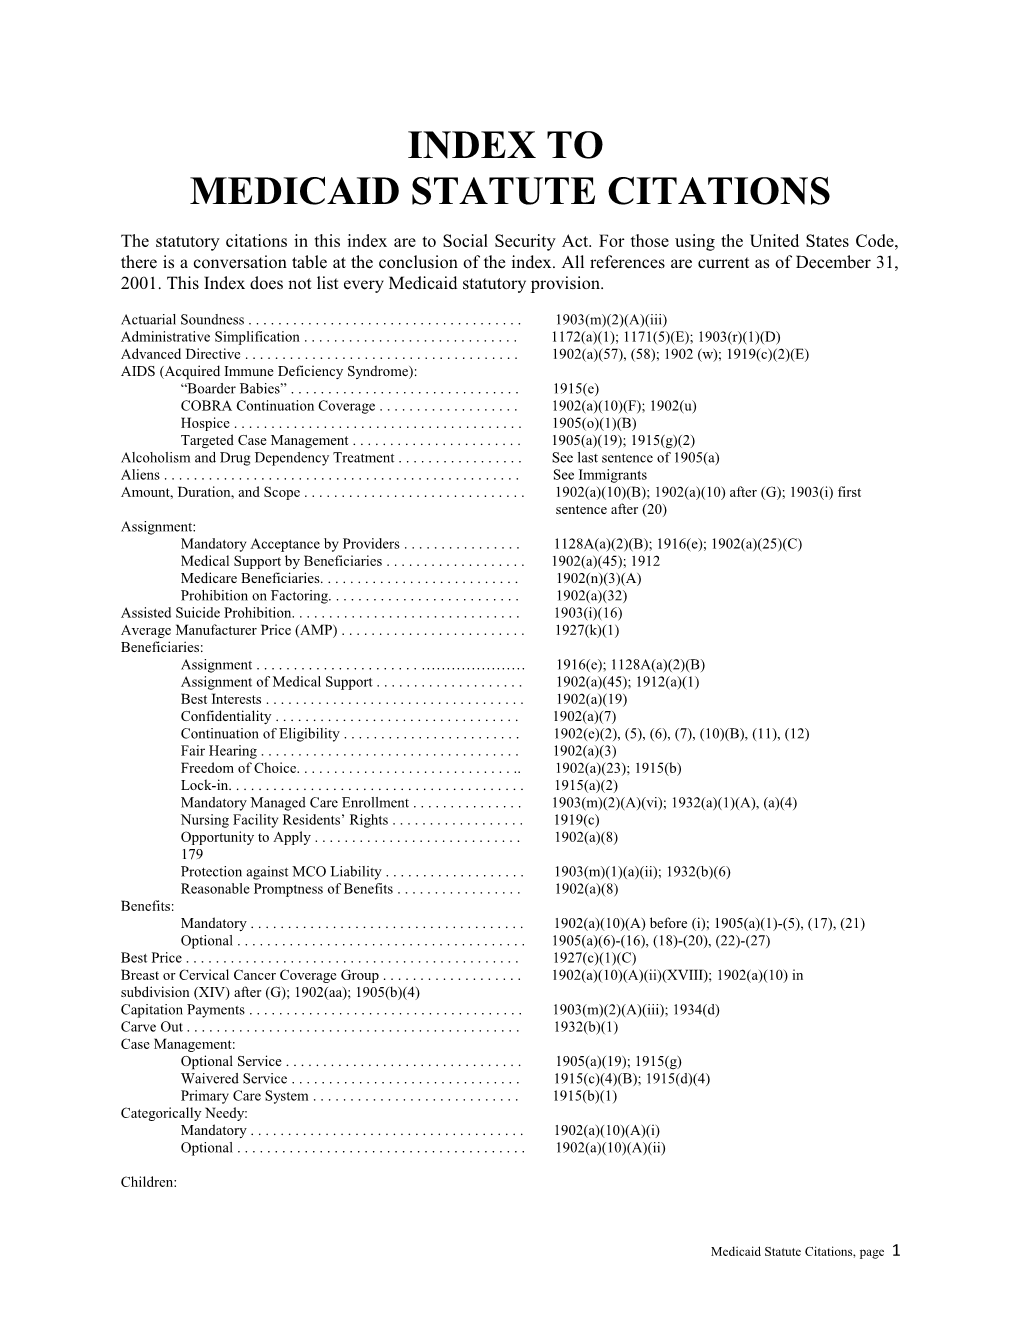 Medicaid Statute Citations